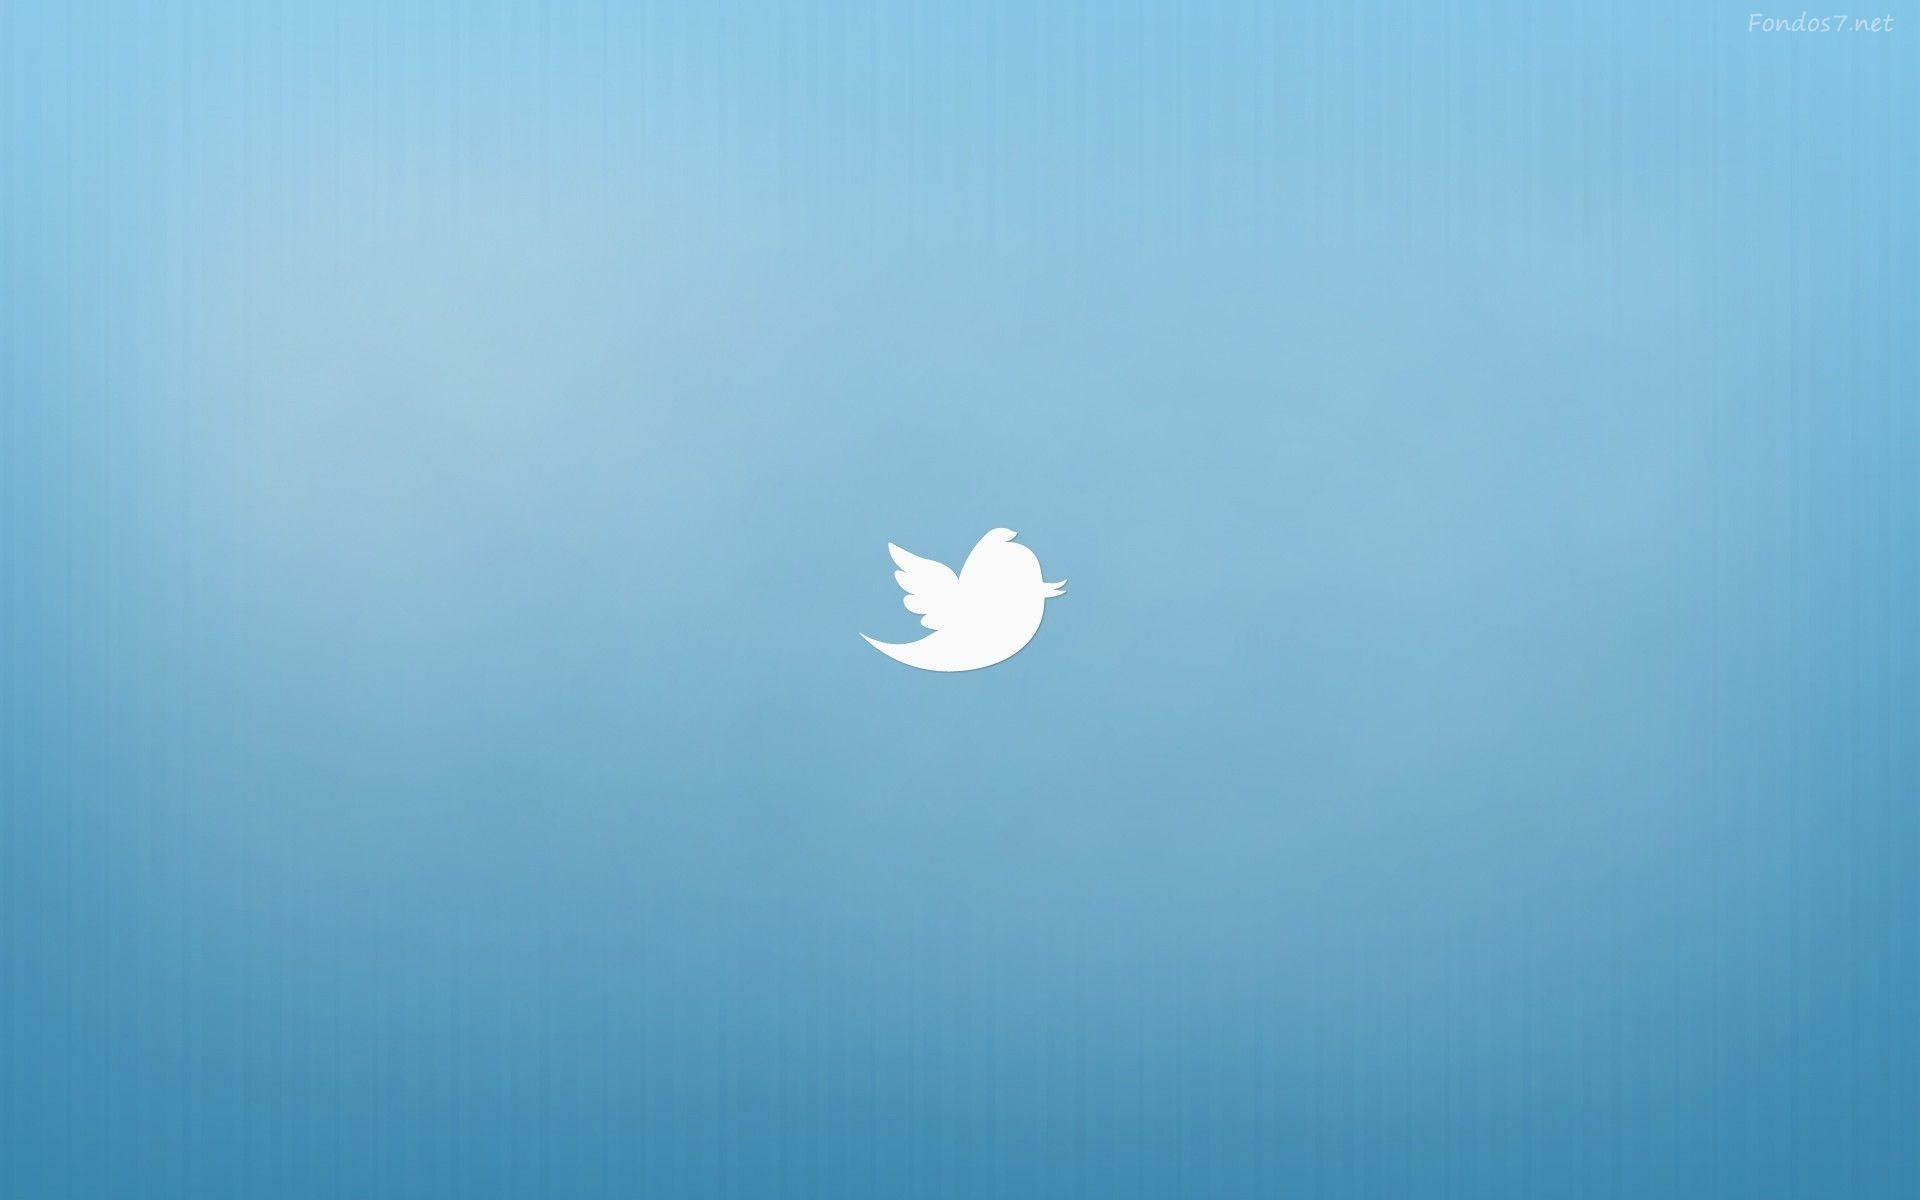 Twitter Wallpaper, HD Twitter Wallpaper. Download Free